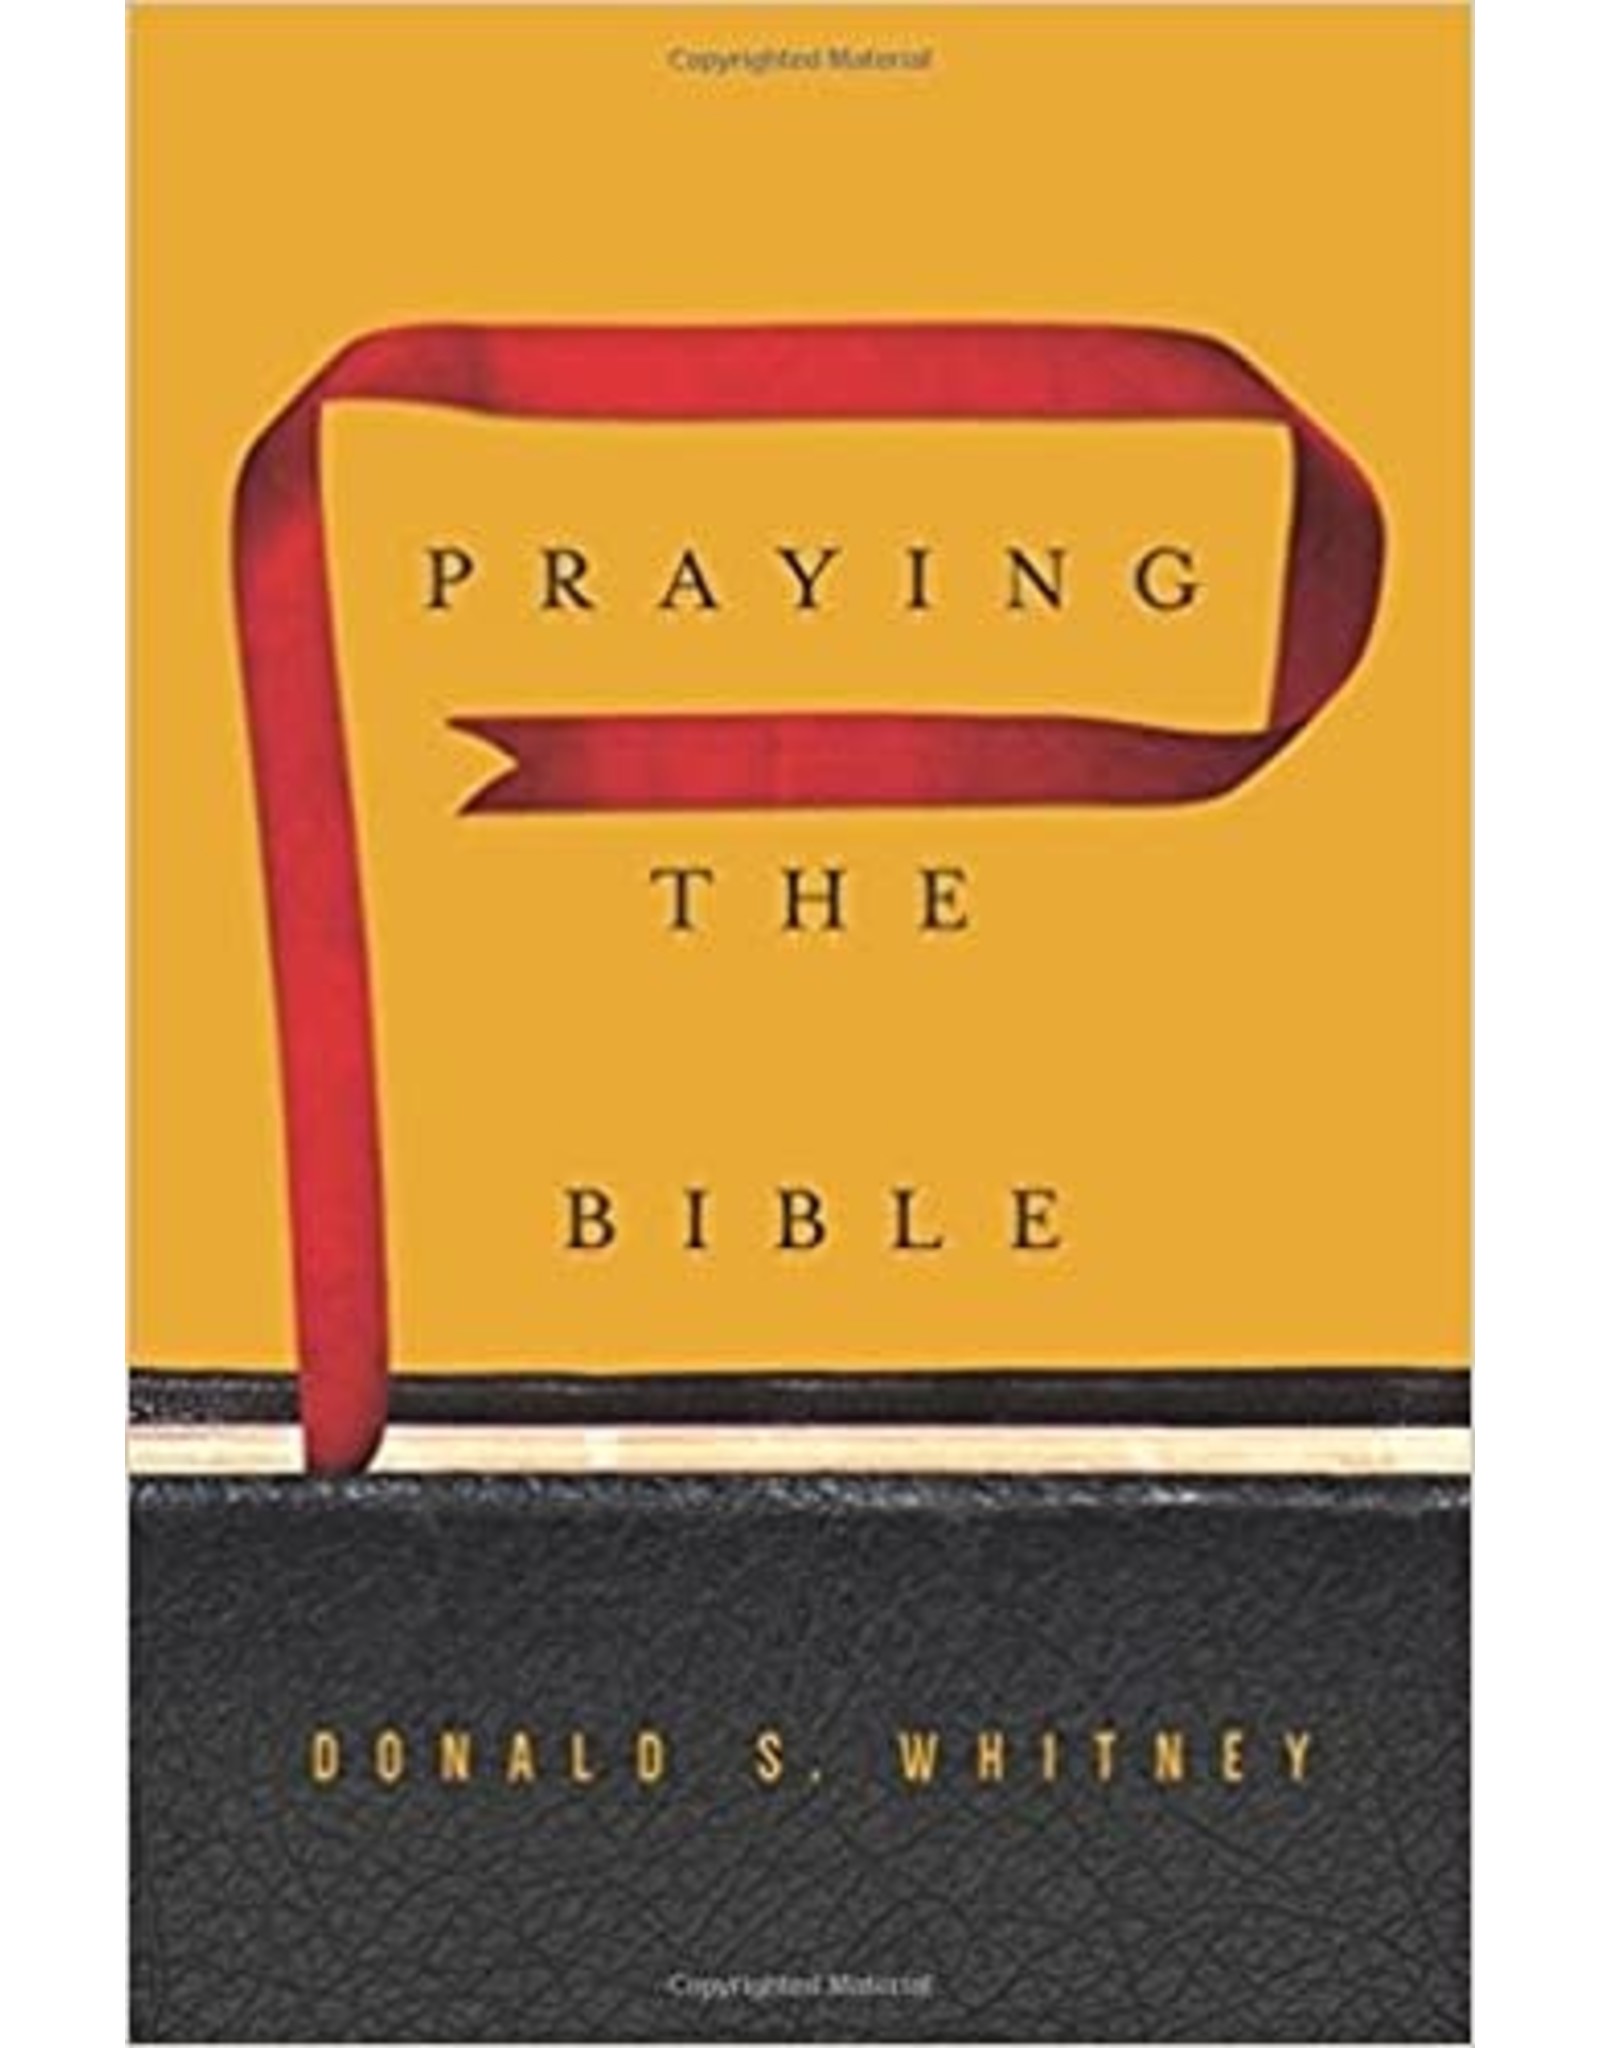 Donald S Whitney Praying the Bible